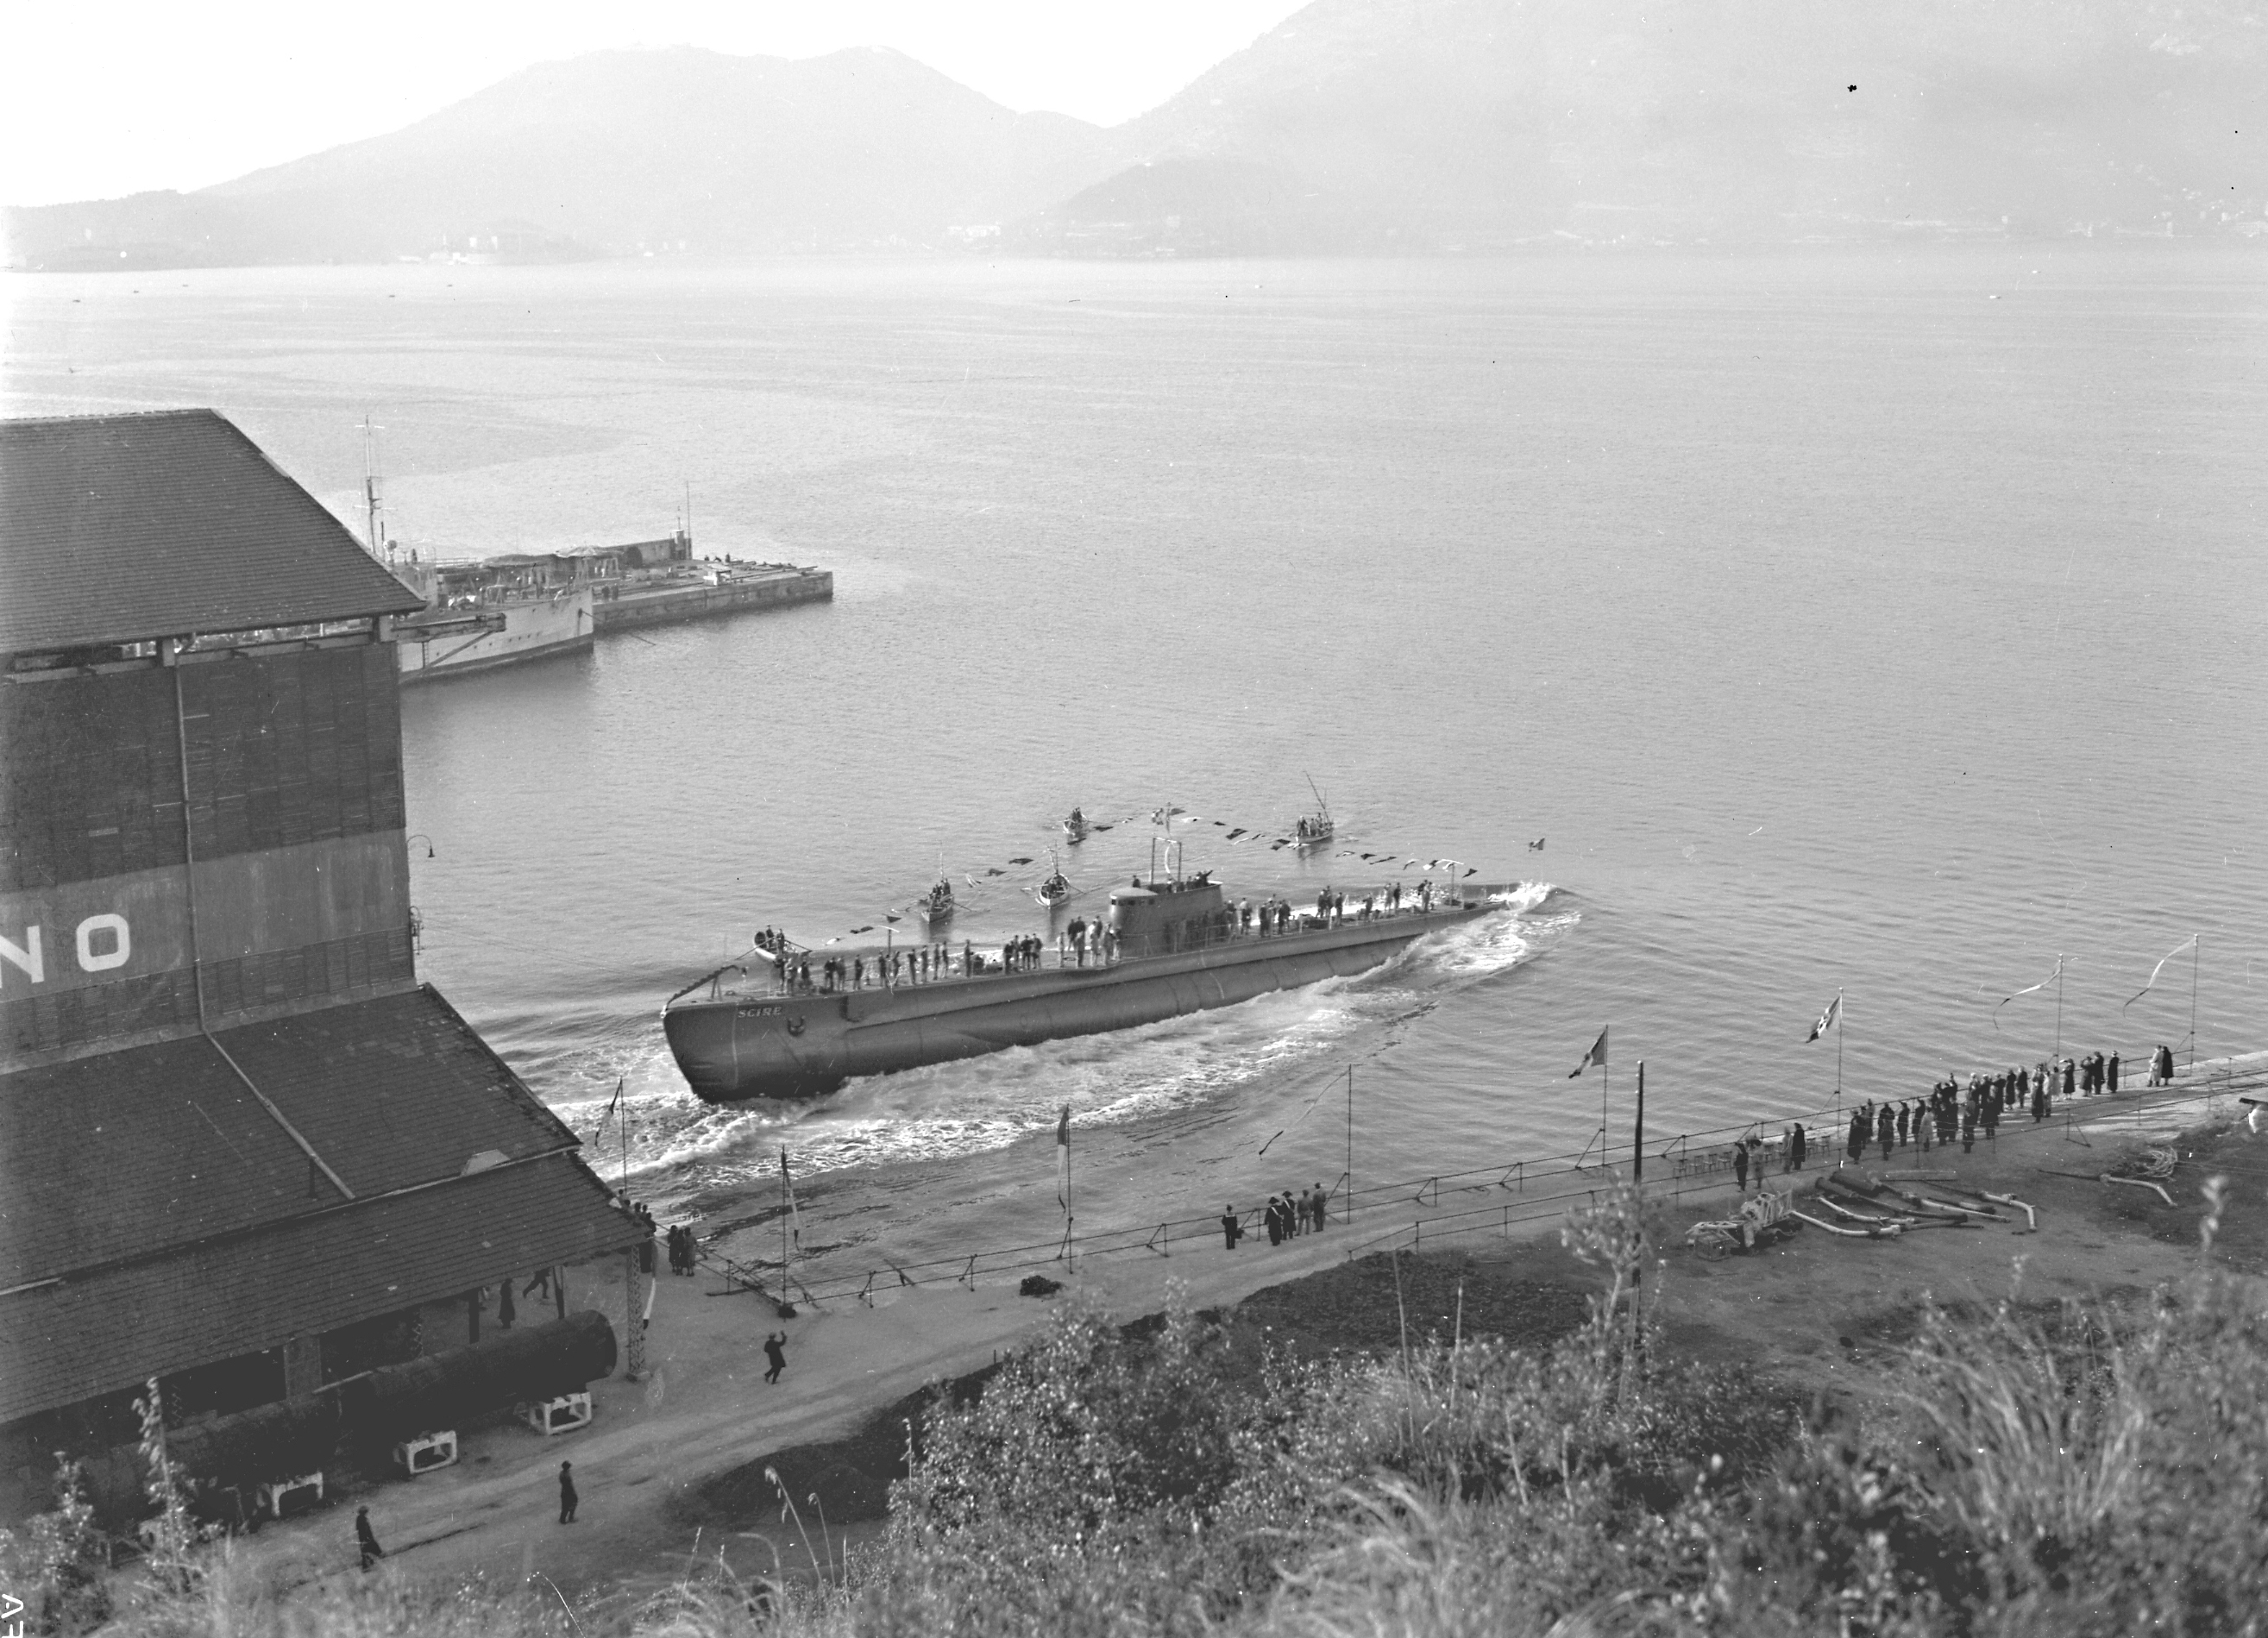 Launch of the Scirè on 6 January 1938. Photo courtesy of Fincantieri cantieri navali Italiani S.p.a.